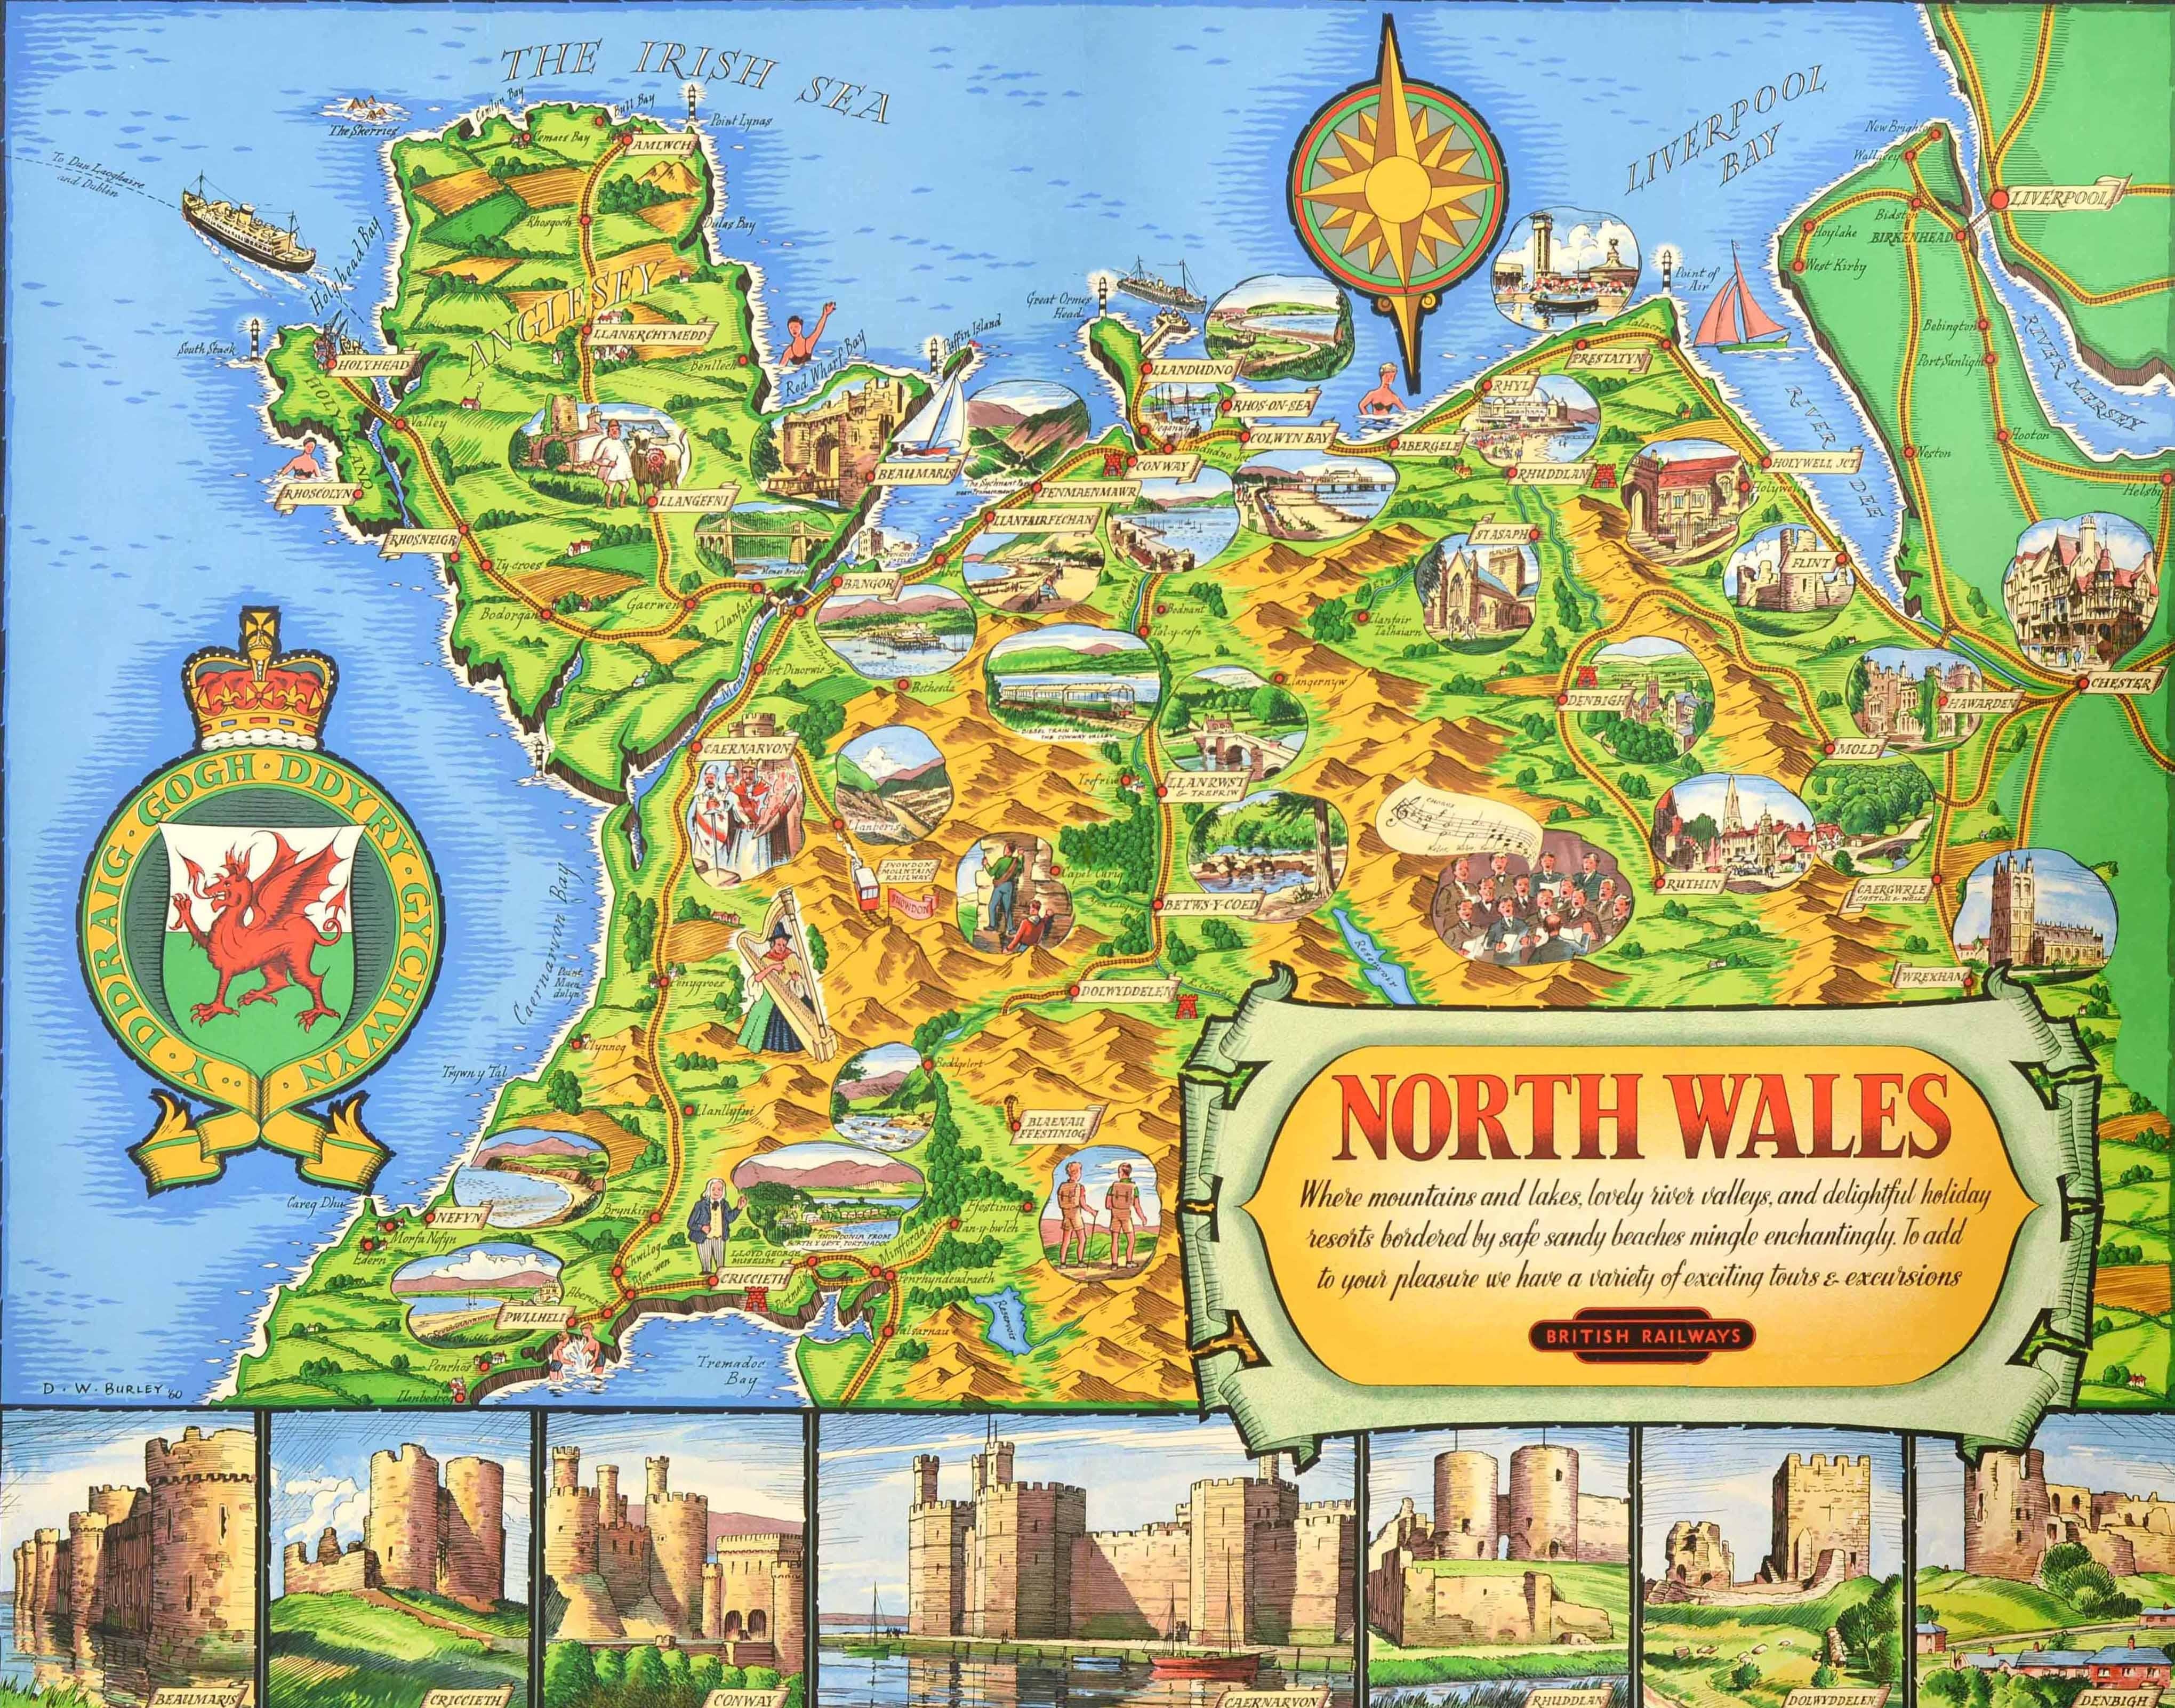 Original Vintage Travel Poster North Wales Map British Railways DW Burley - Print by Unknown